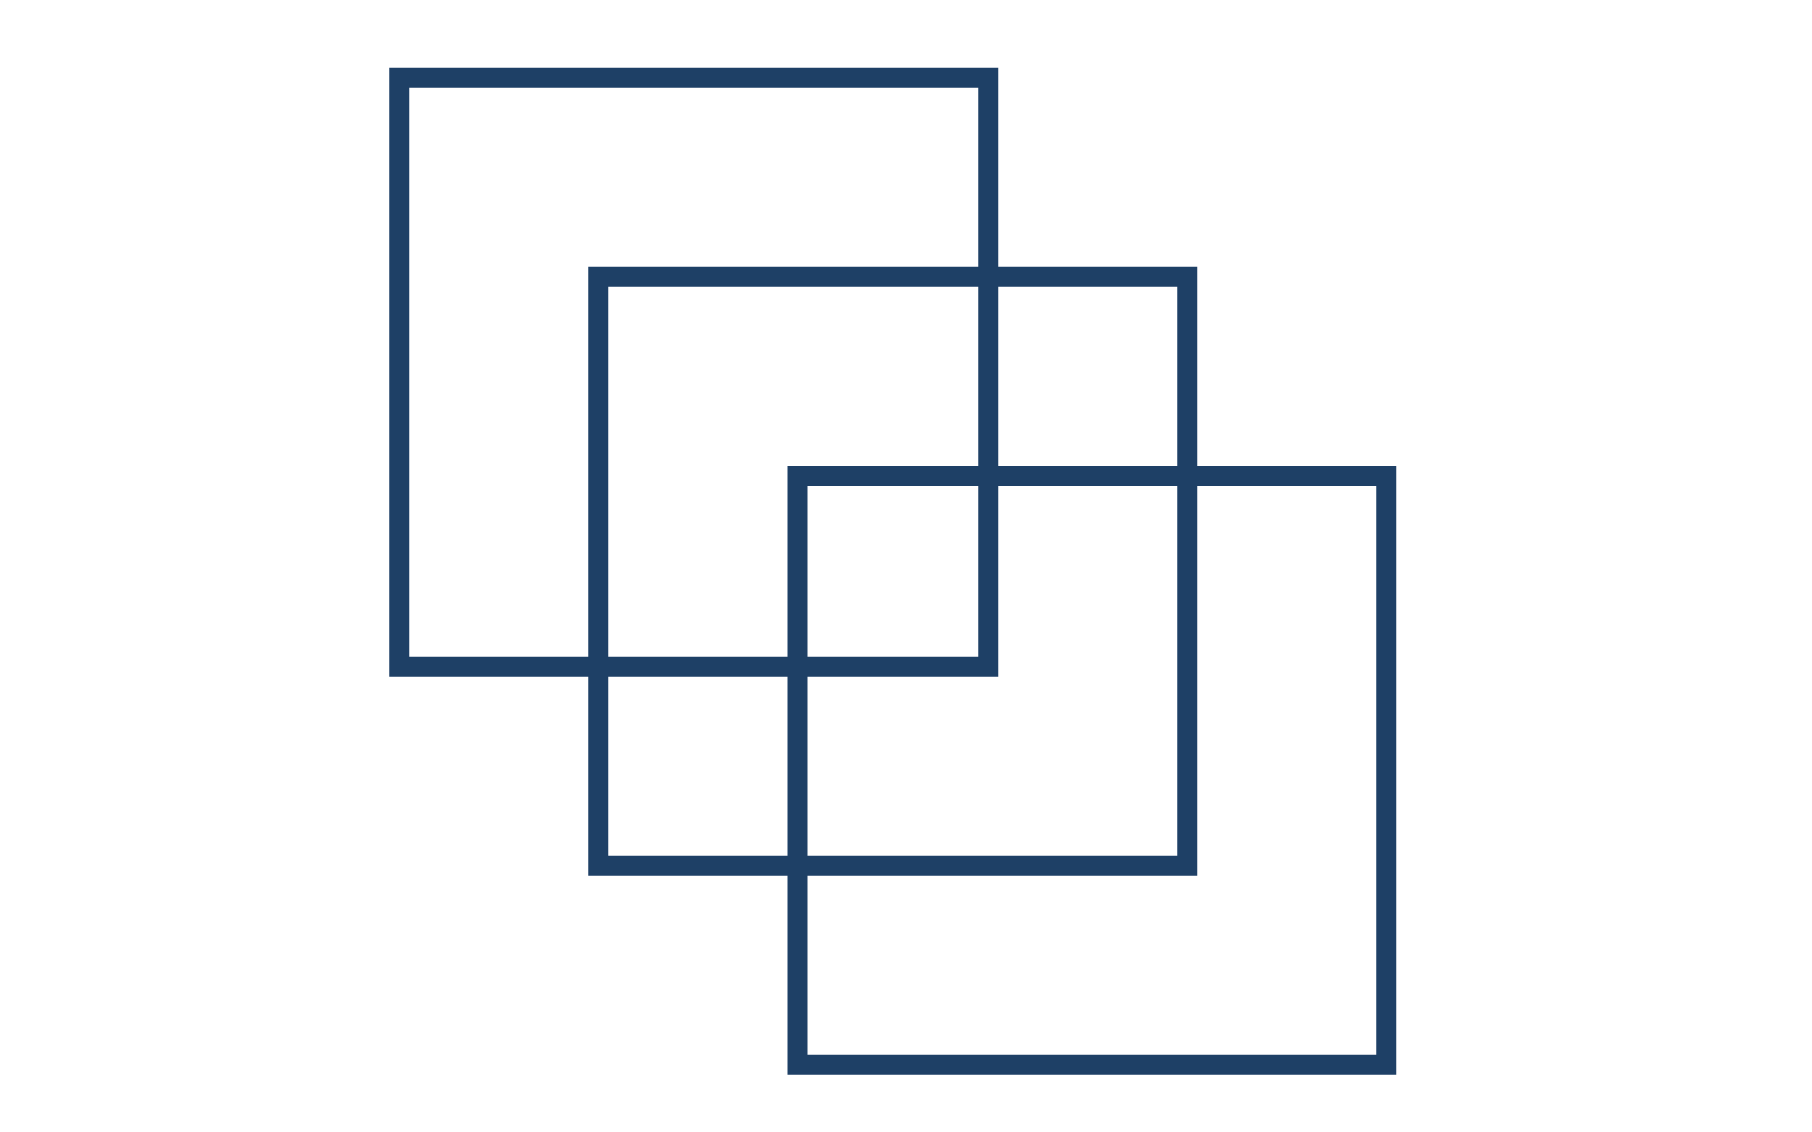 три пересекающихся квадрата — условия головоломки Льюиса Кэрролла